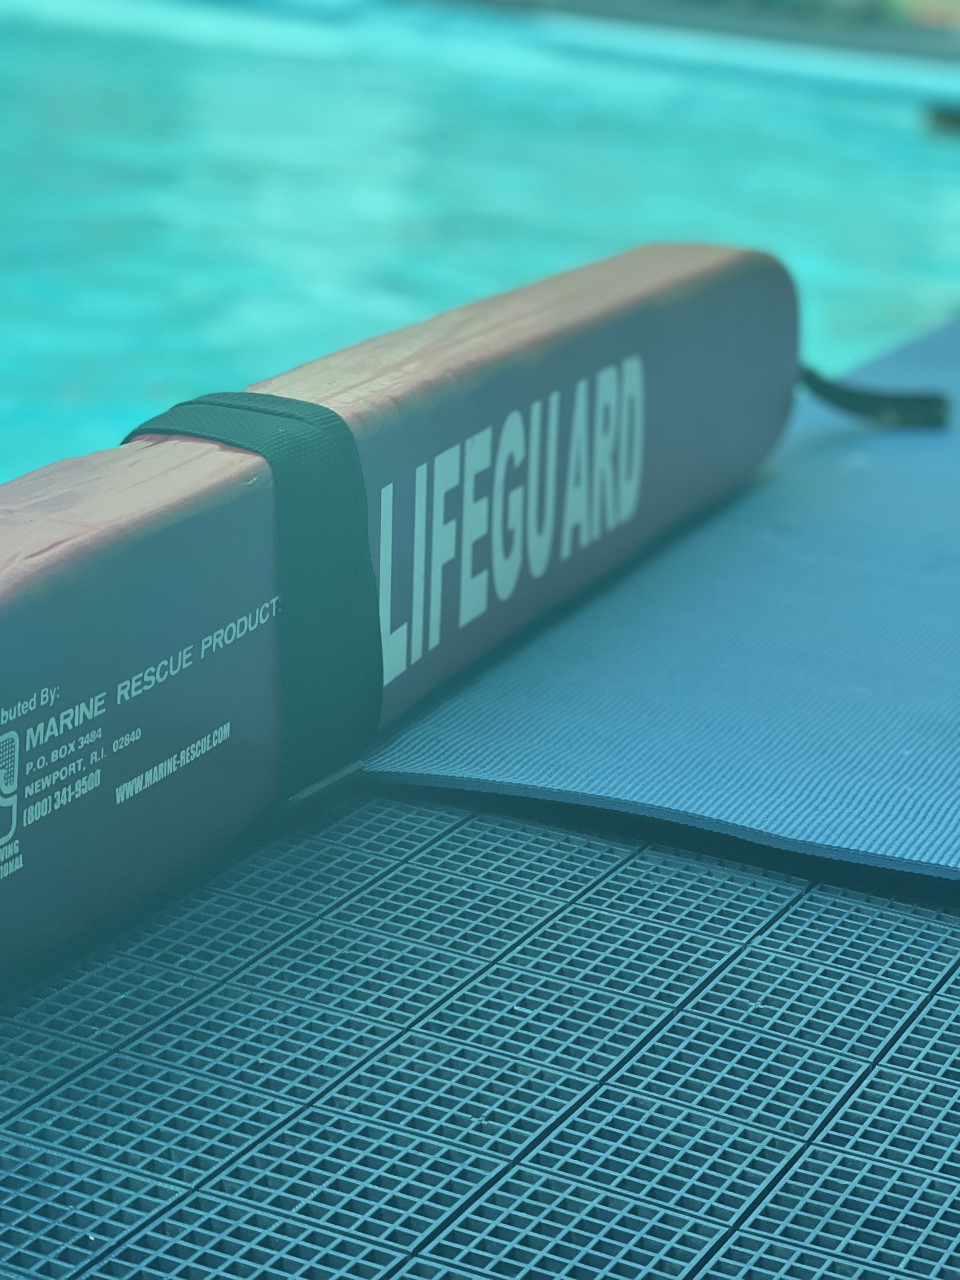 Lifeguard%20course%20march%202022.jpg